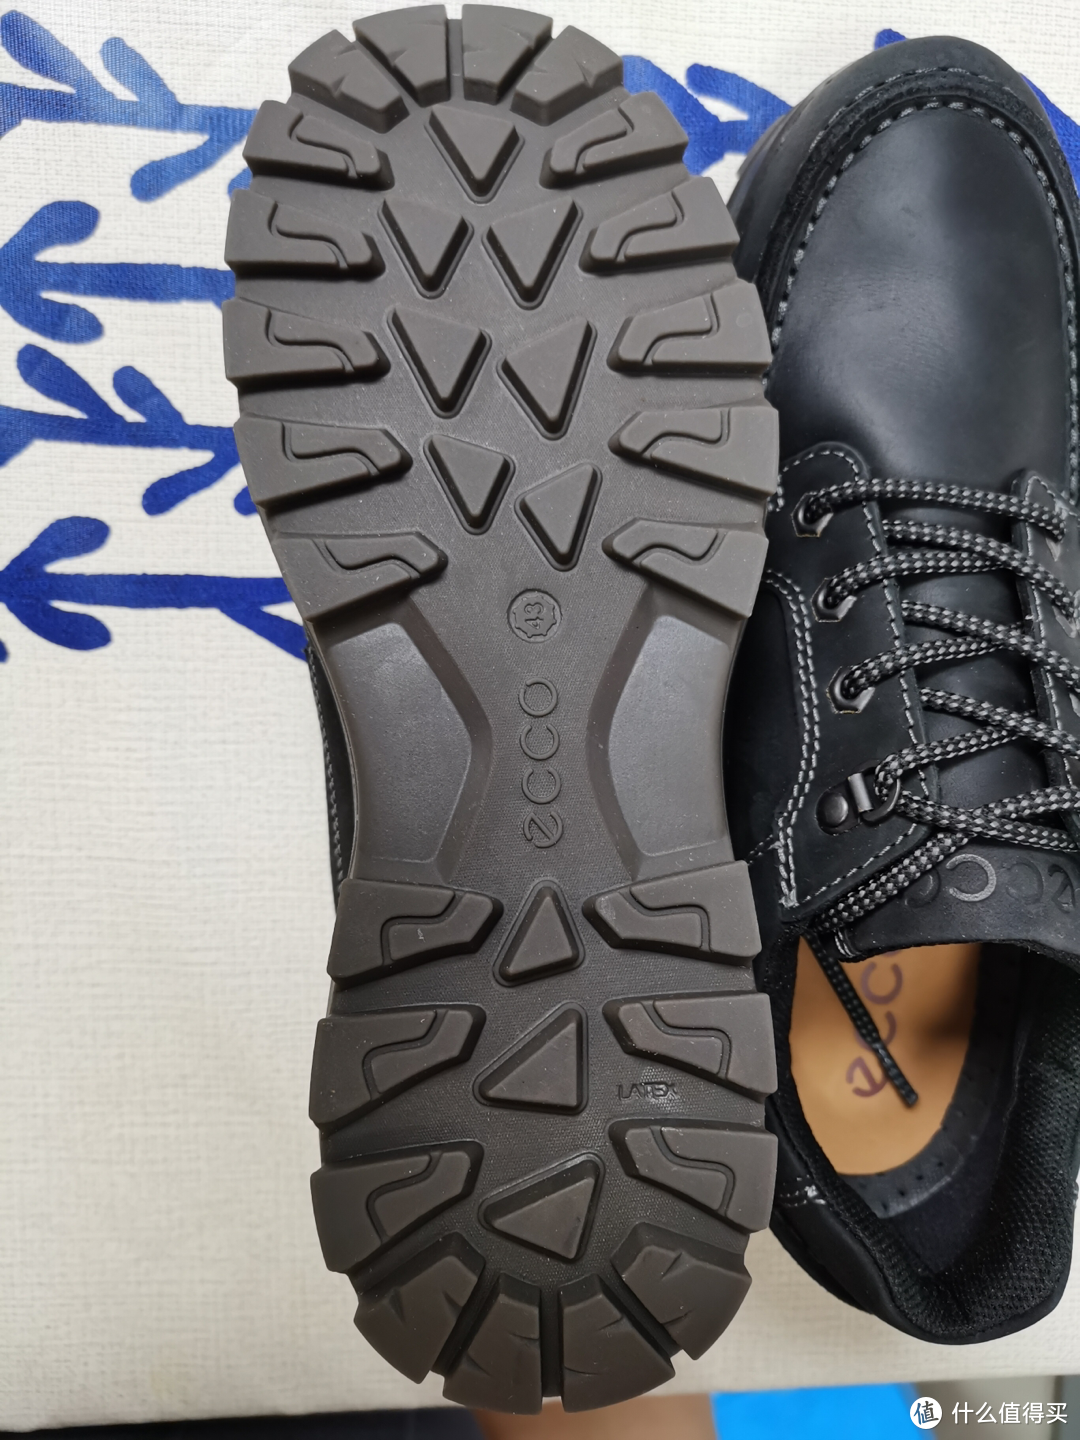 TPU的鞋底，成本比橡胶的更贵，更轻盈耐磨。